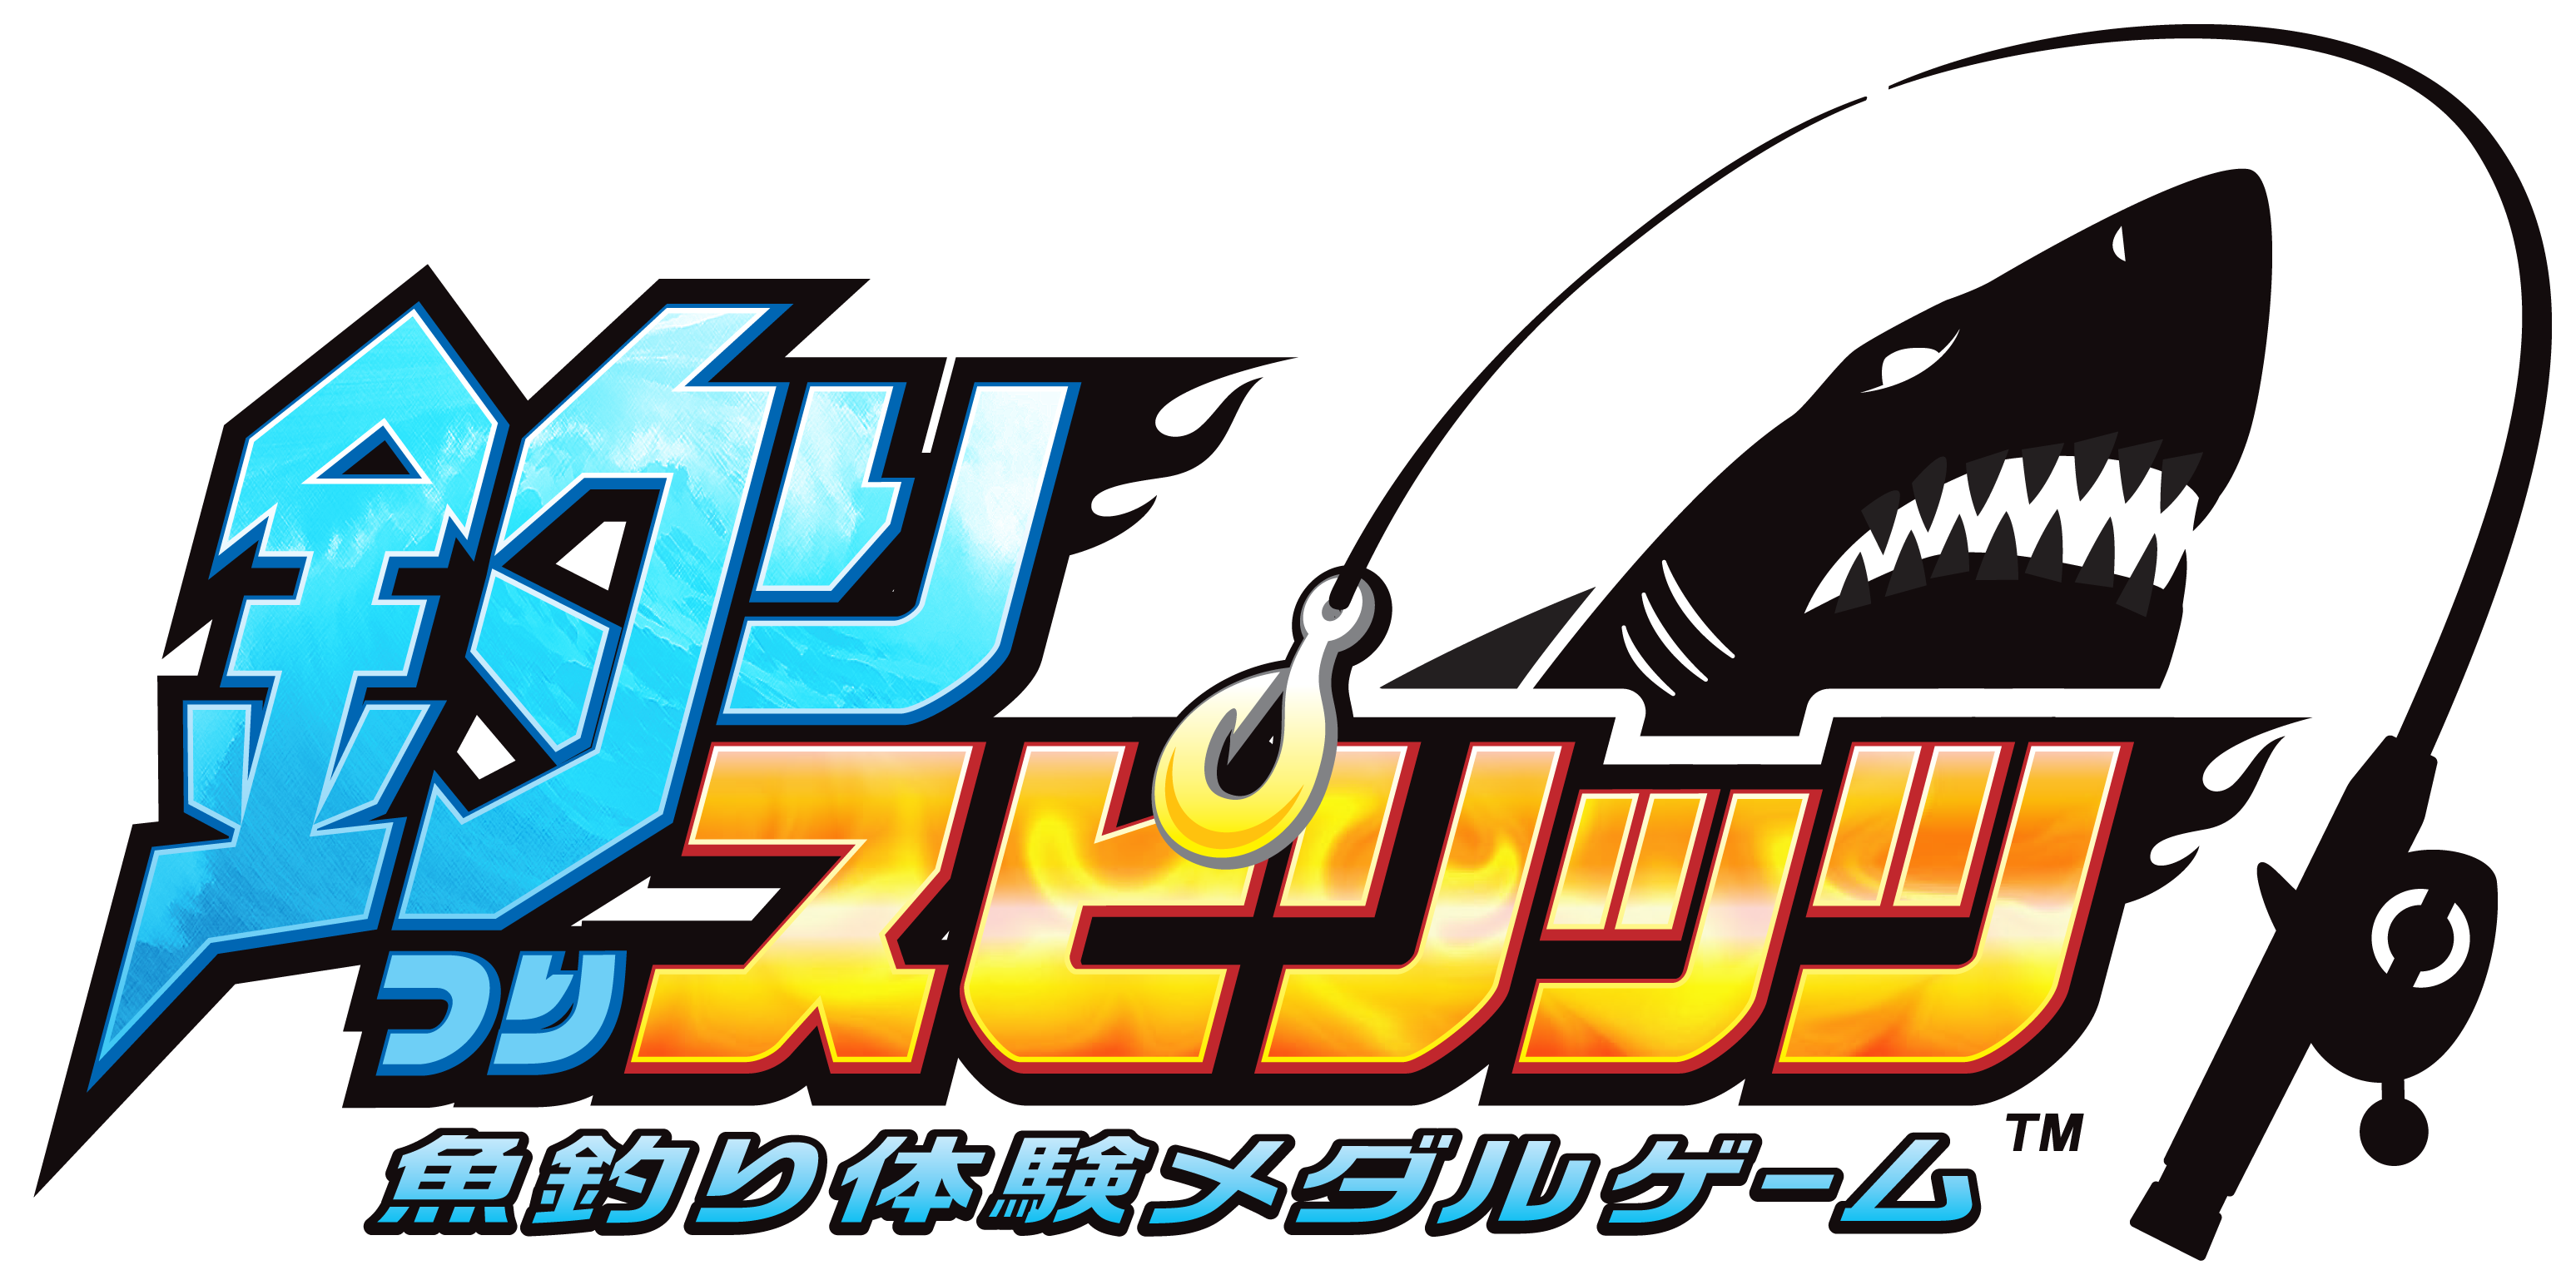 Fishing Spirits logo (Japan) by RingoStarr39 on DeviantArt